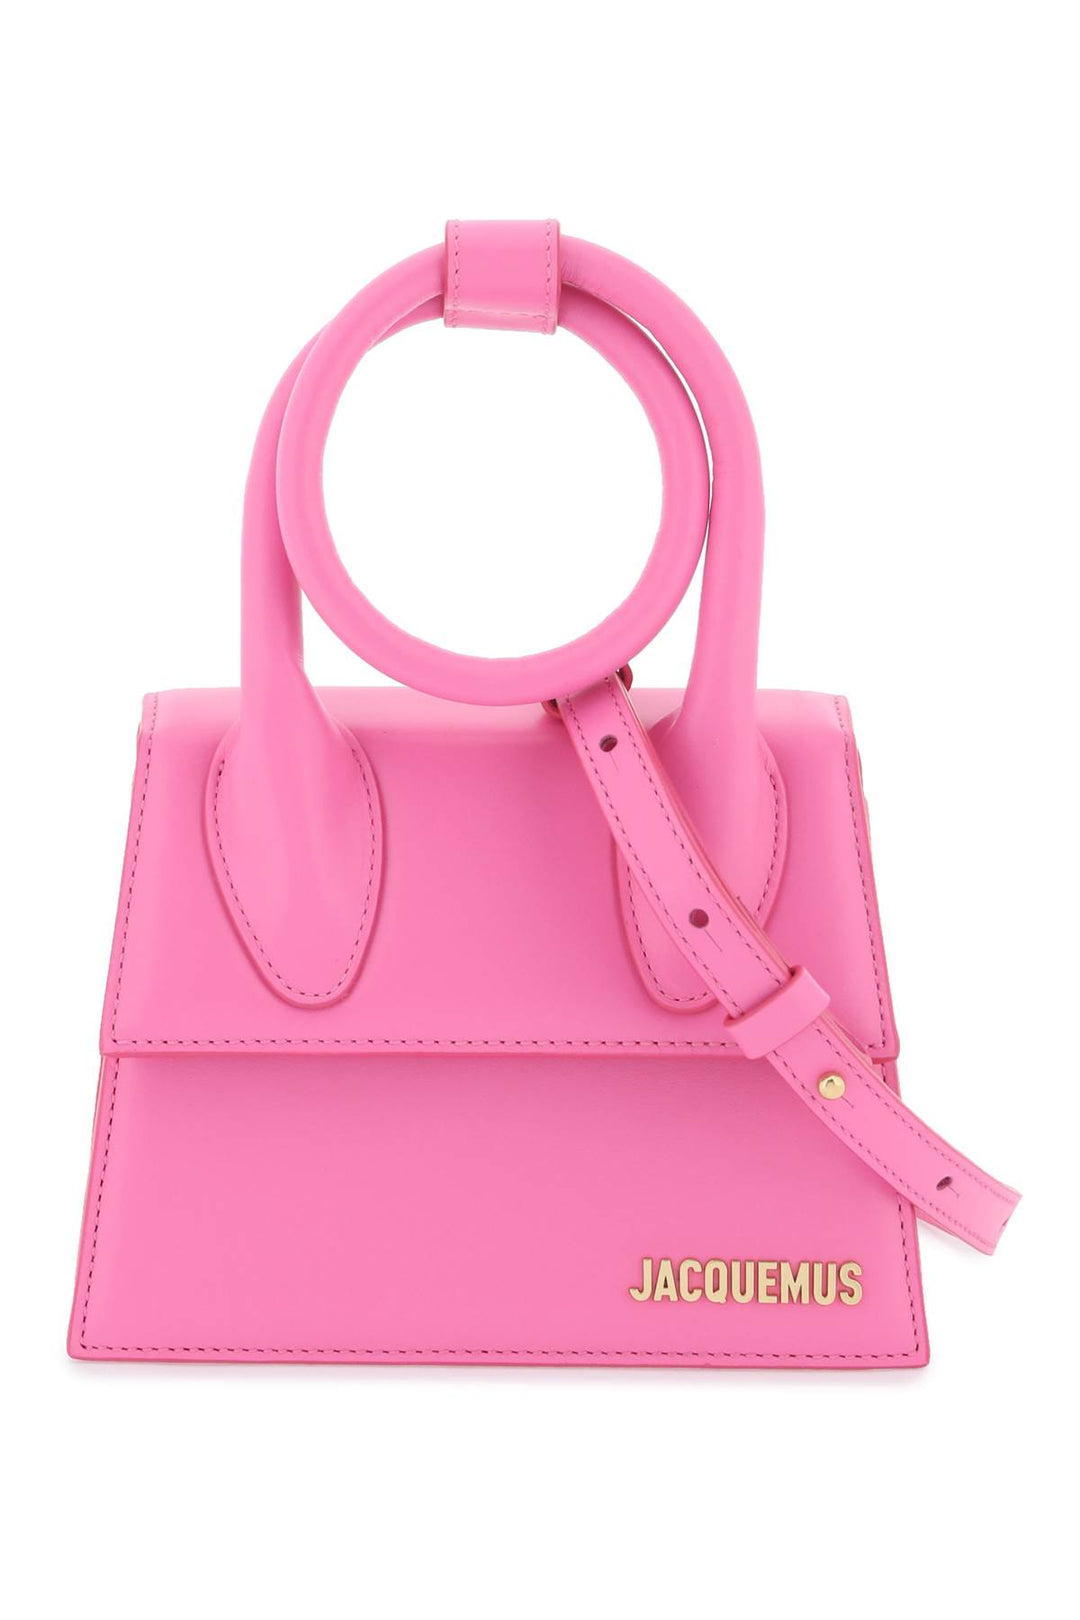 Jacquemus Le Chiquito Noeud Bag   Rosa